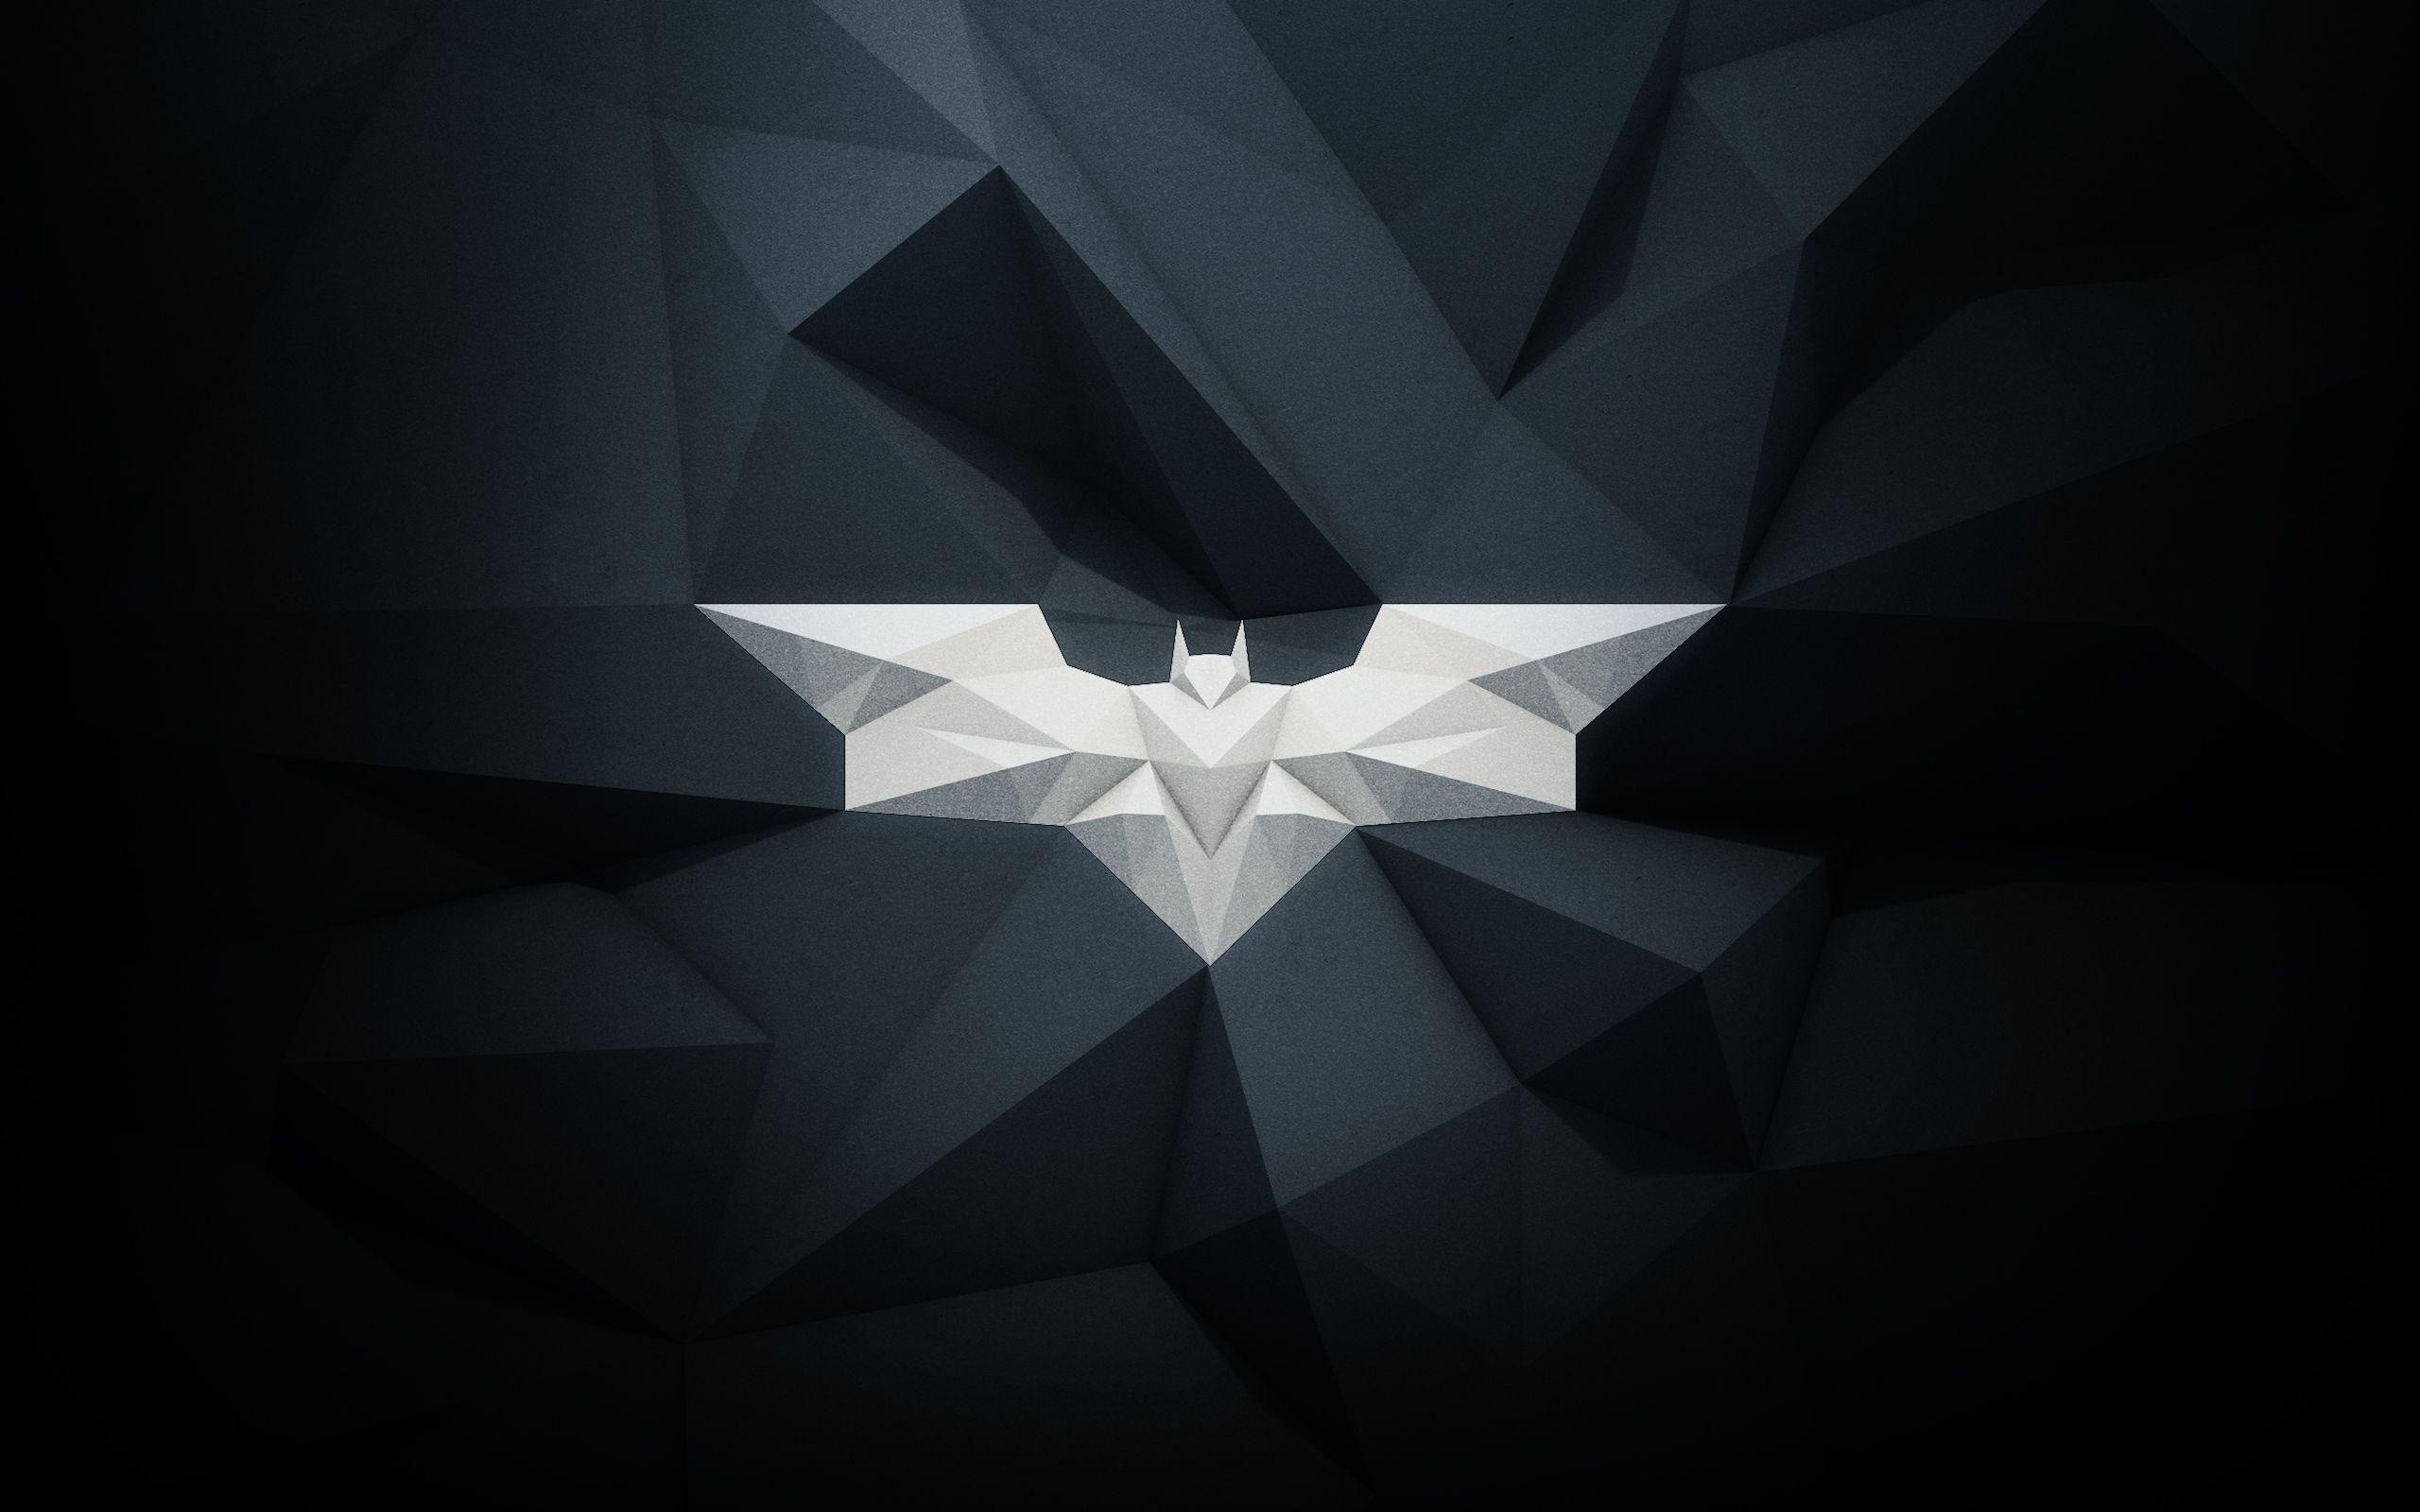 General 2560x1600 Batman The Dark Knight Rises low poly comics Batman logo black polygon art